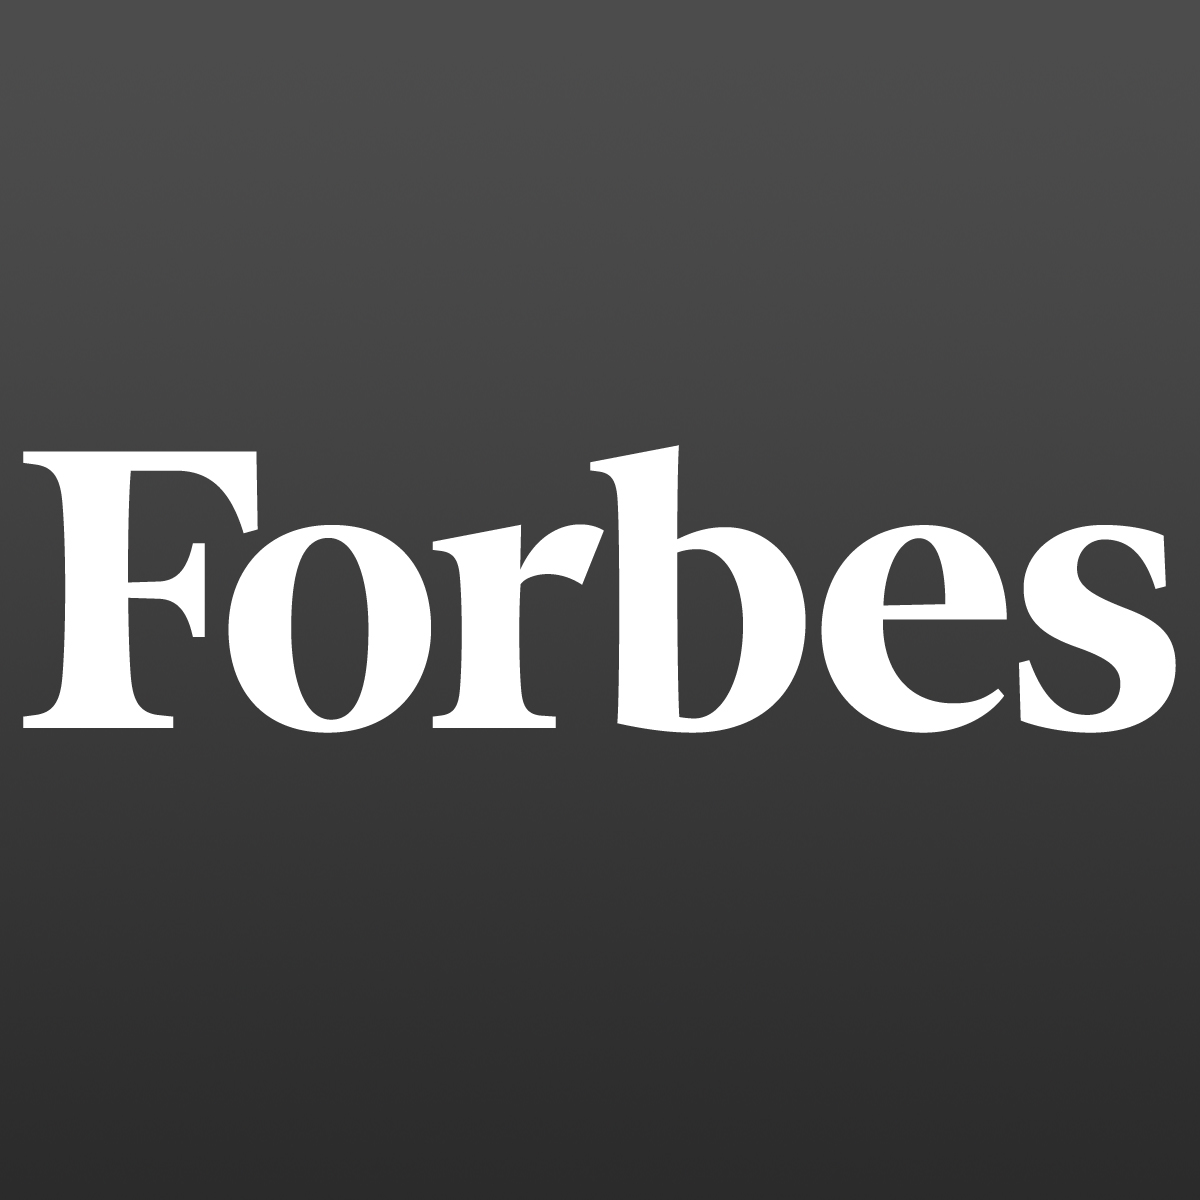 La revista Forbes calificó de «patética» a la economía argentina